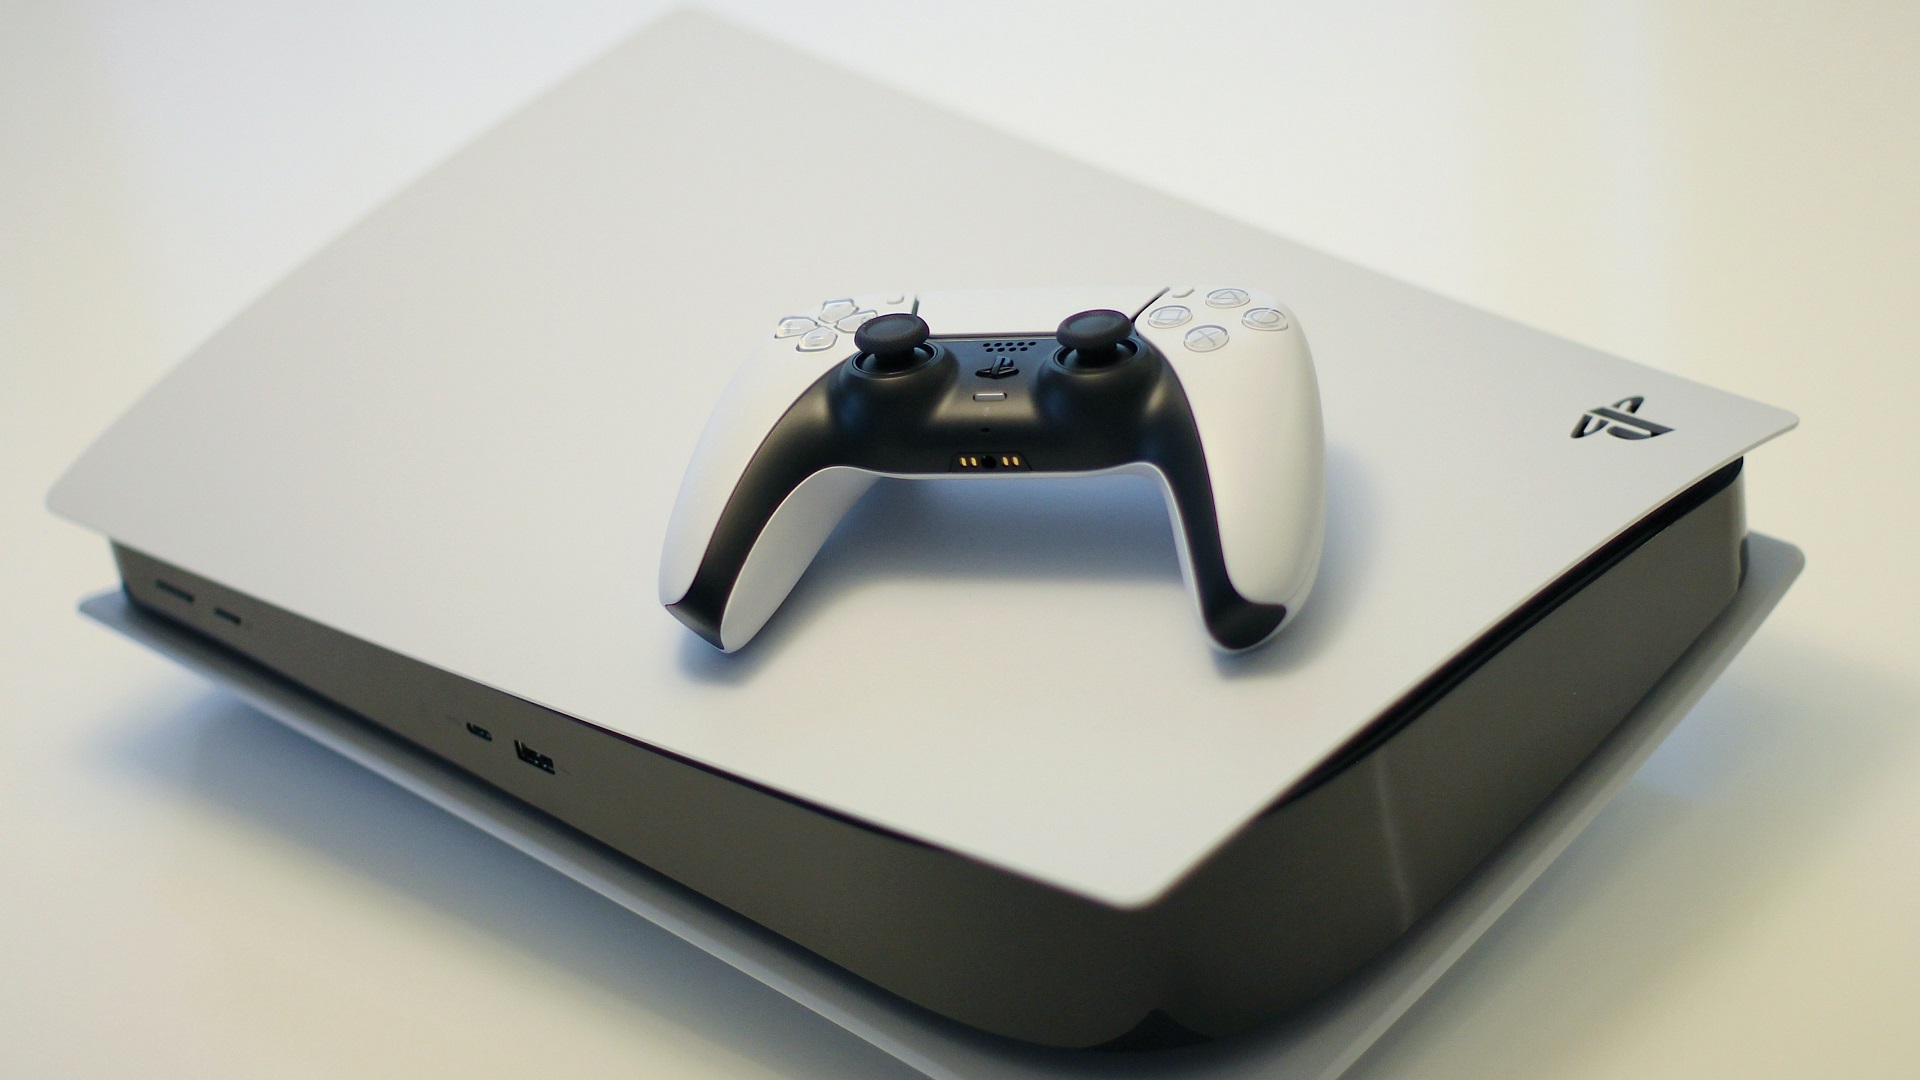 PlayStation 5 Slim release date leaks online